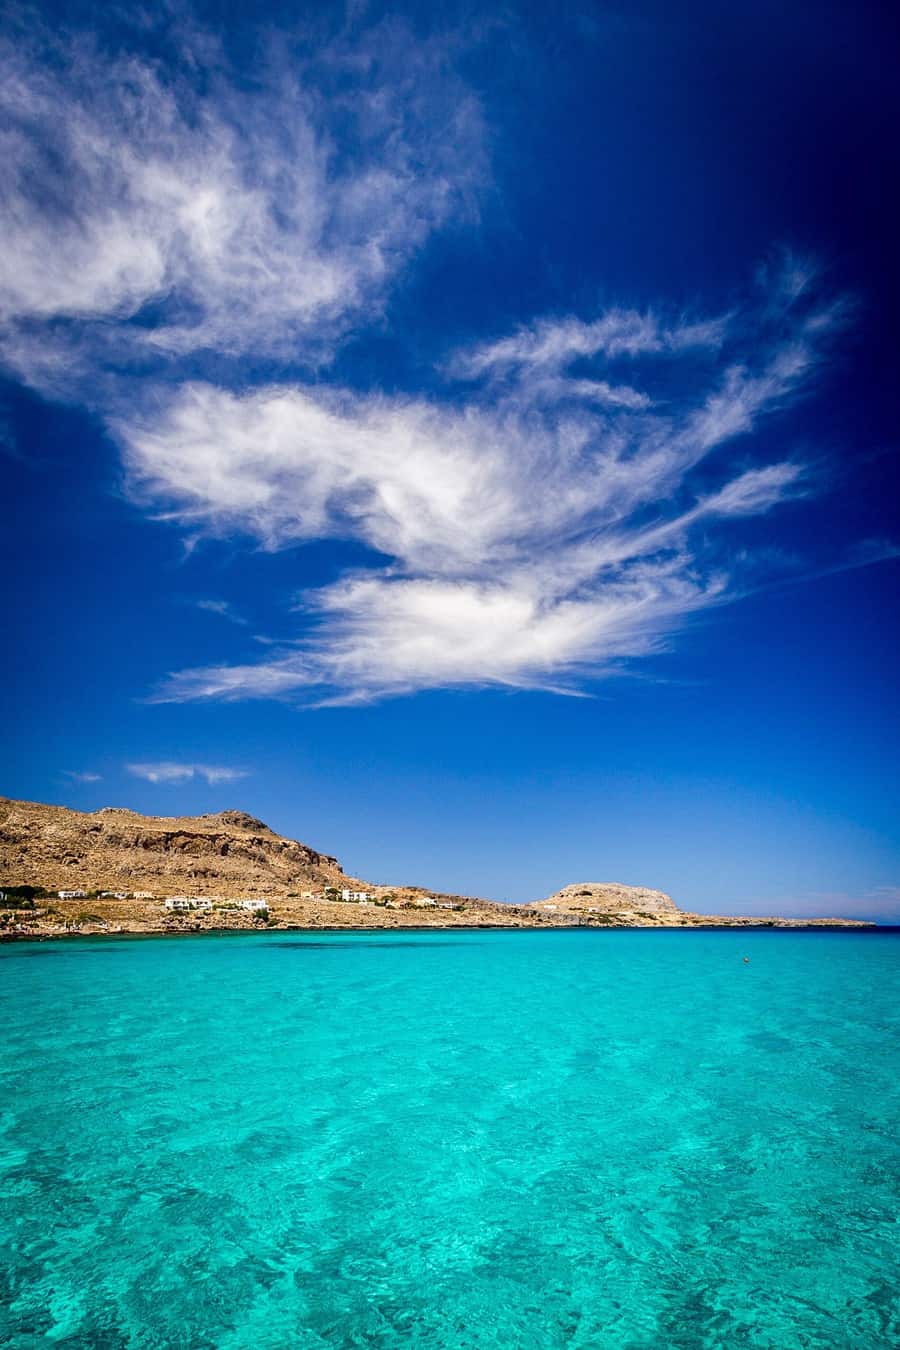  The aquamarine sea in Navarone Bay, Rhodes, Greece, by Rick McEvoy landscape photographer   